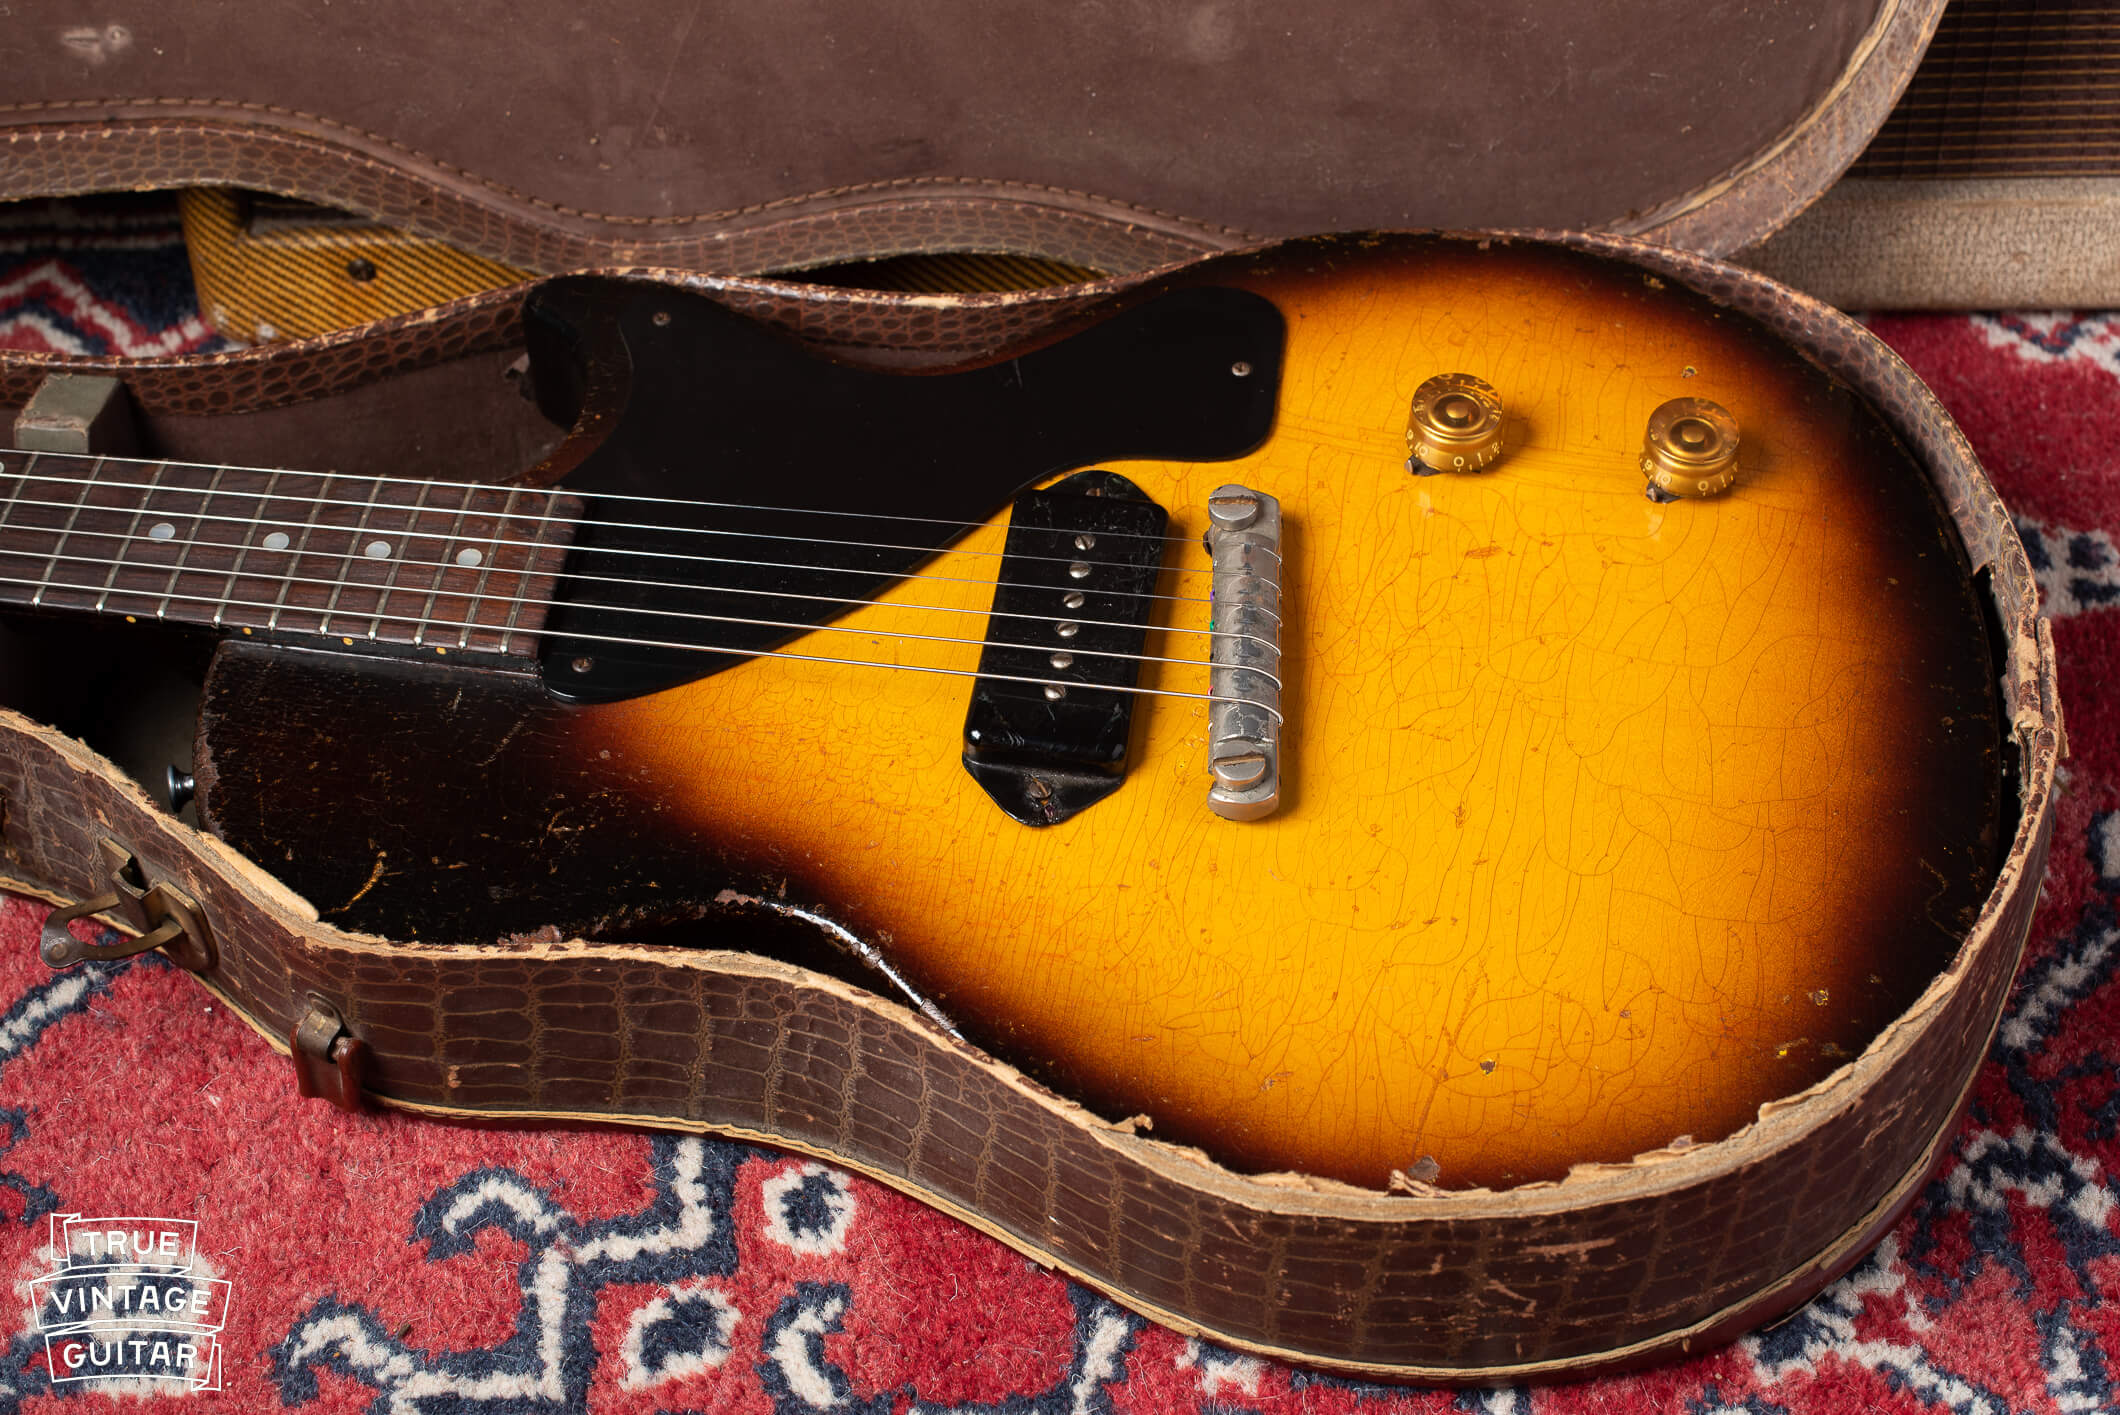 1955 Gibson Les Paul Jr guitar